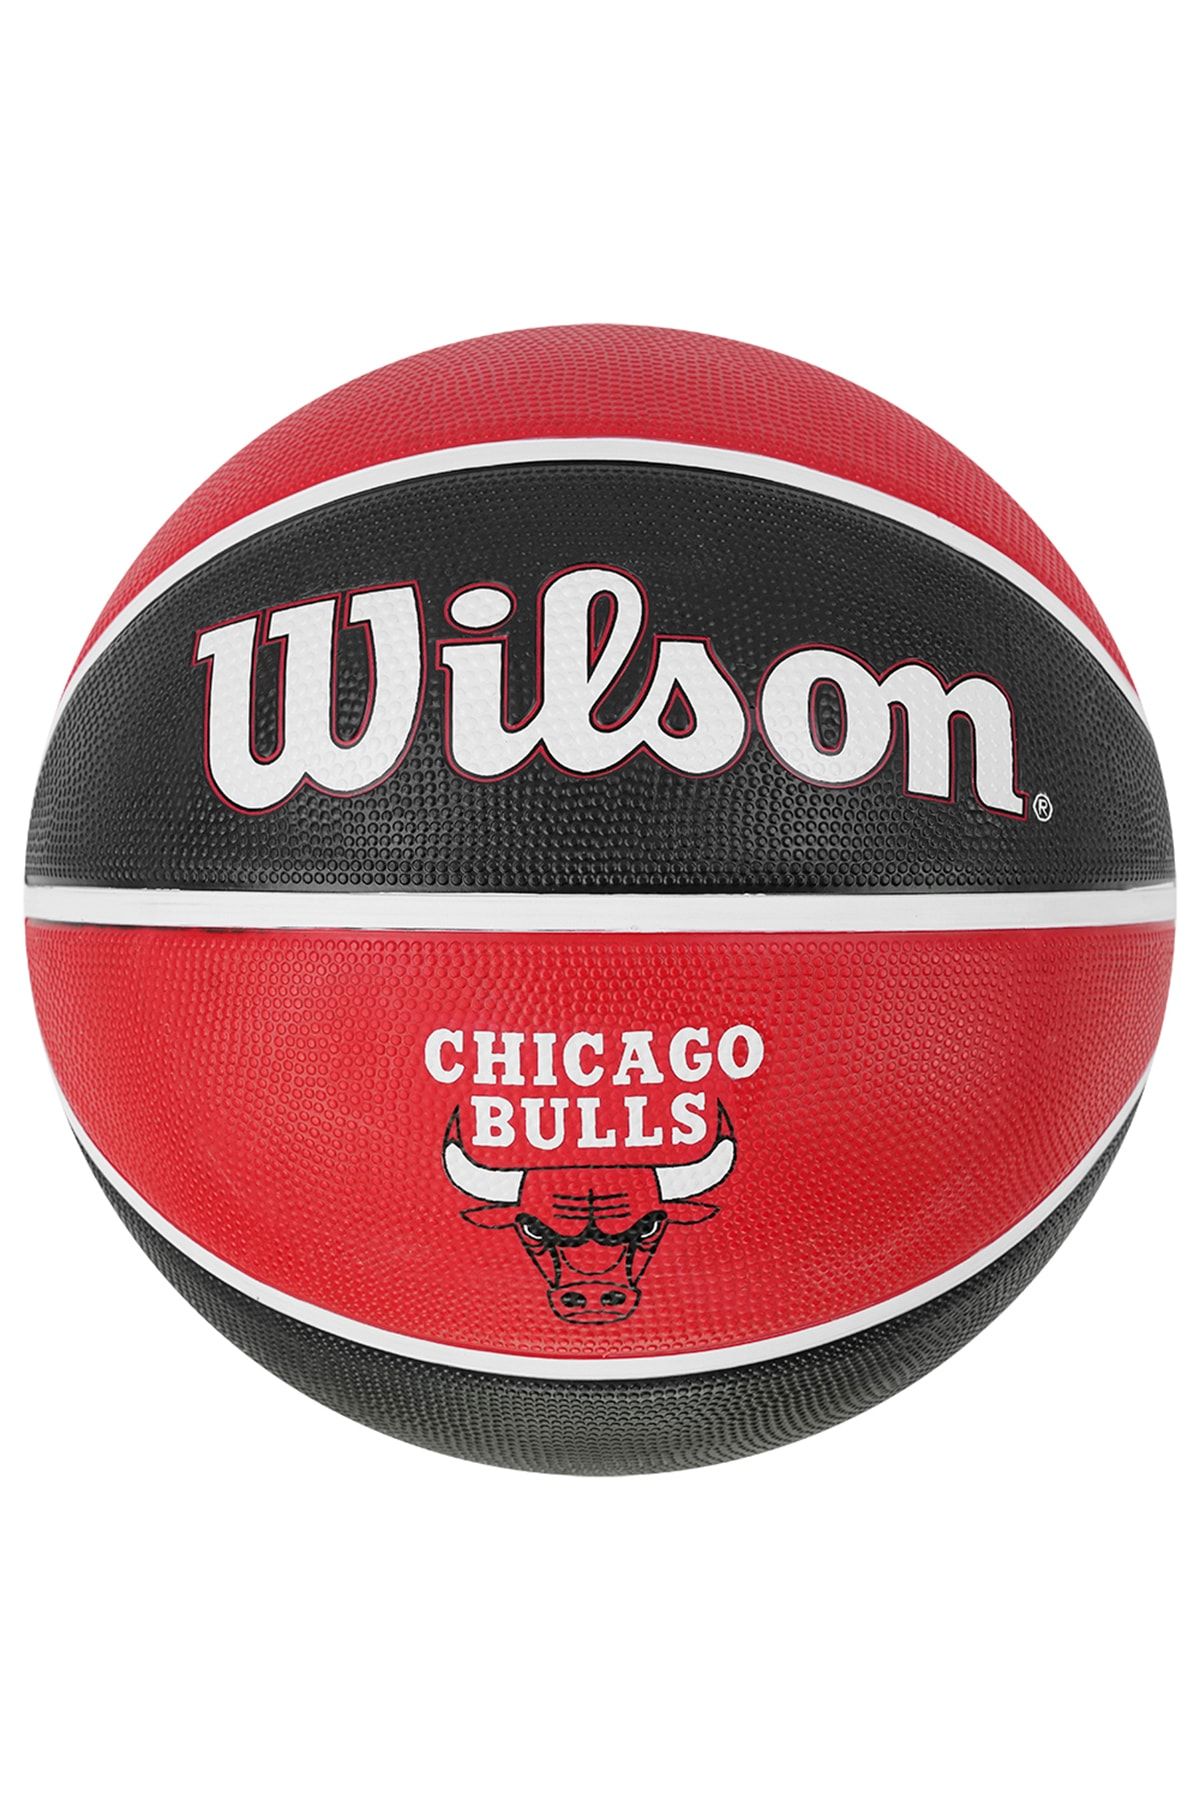 Wilson Wtb1300xbchı Chicago Bulls 7 No Basketbol Topu